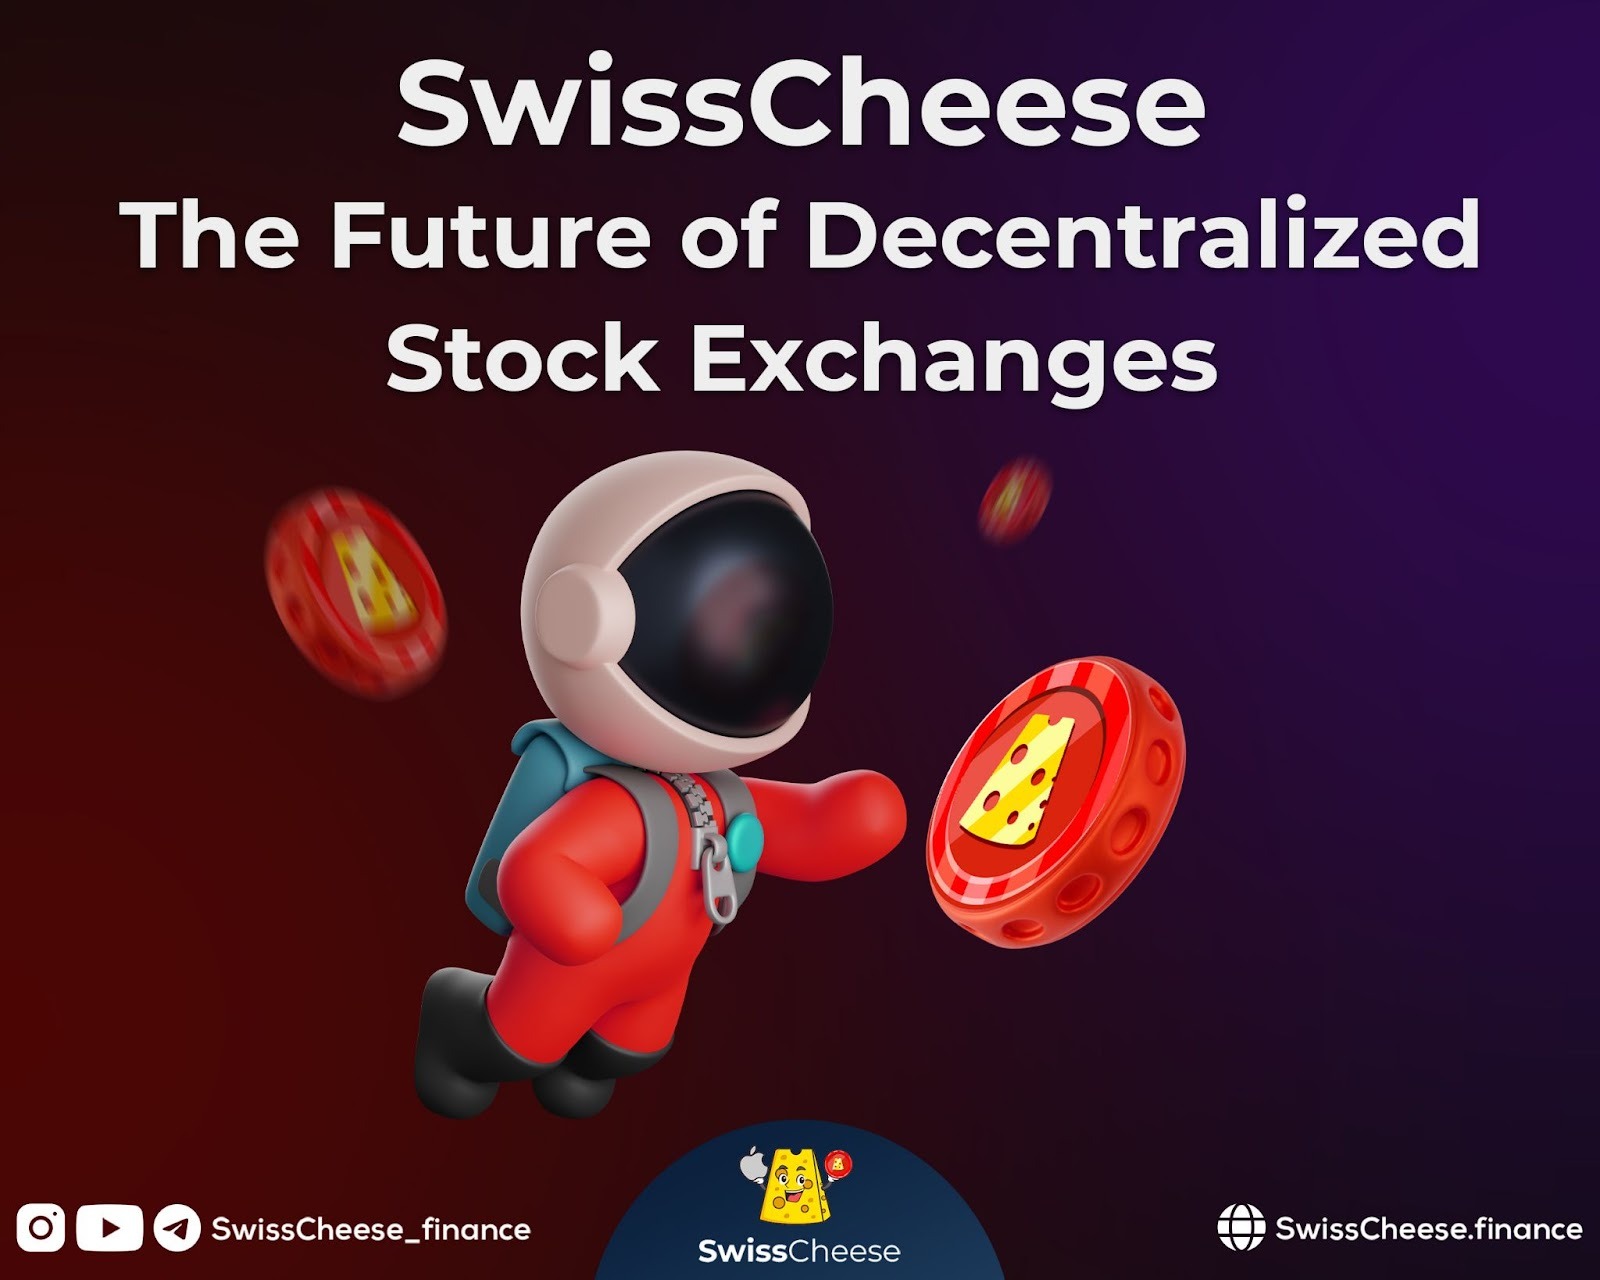 , Swisscheese &#8211; World’s First-Ever Decentralized Stock Exchange